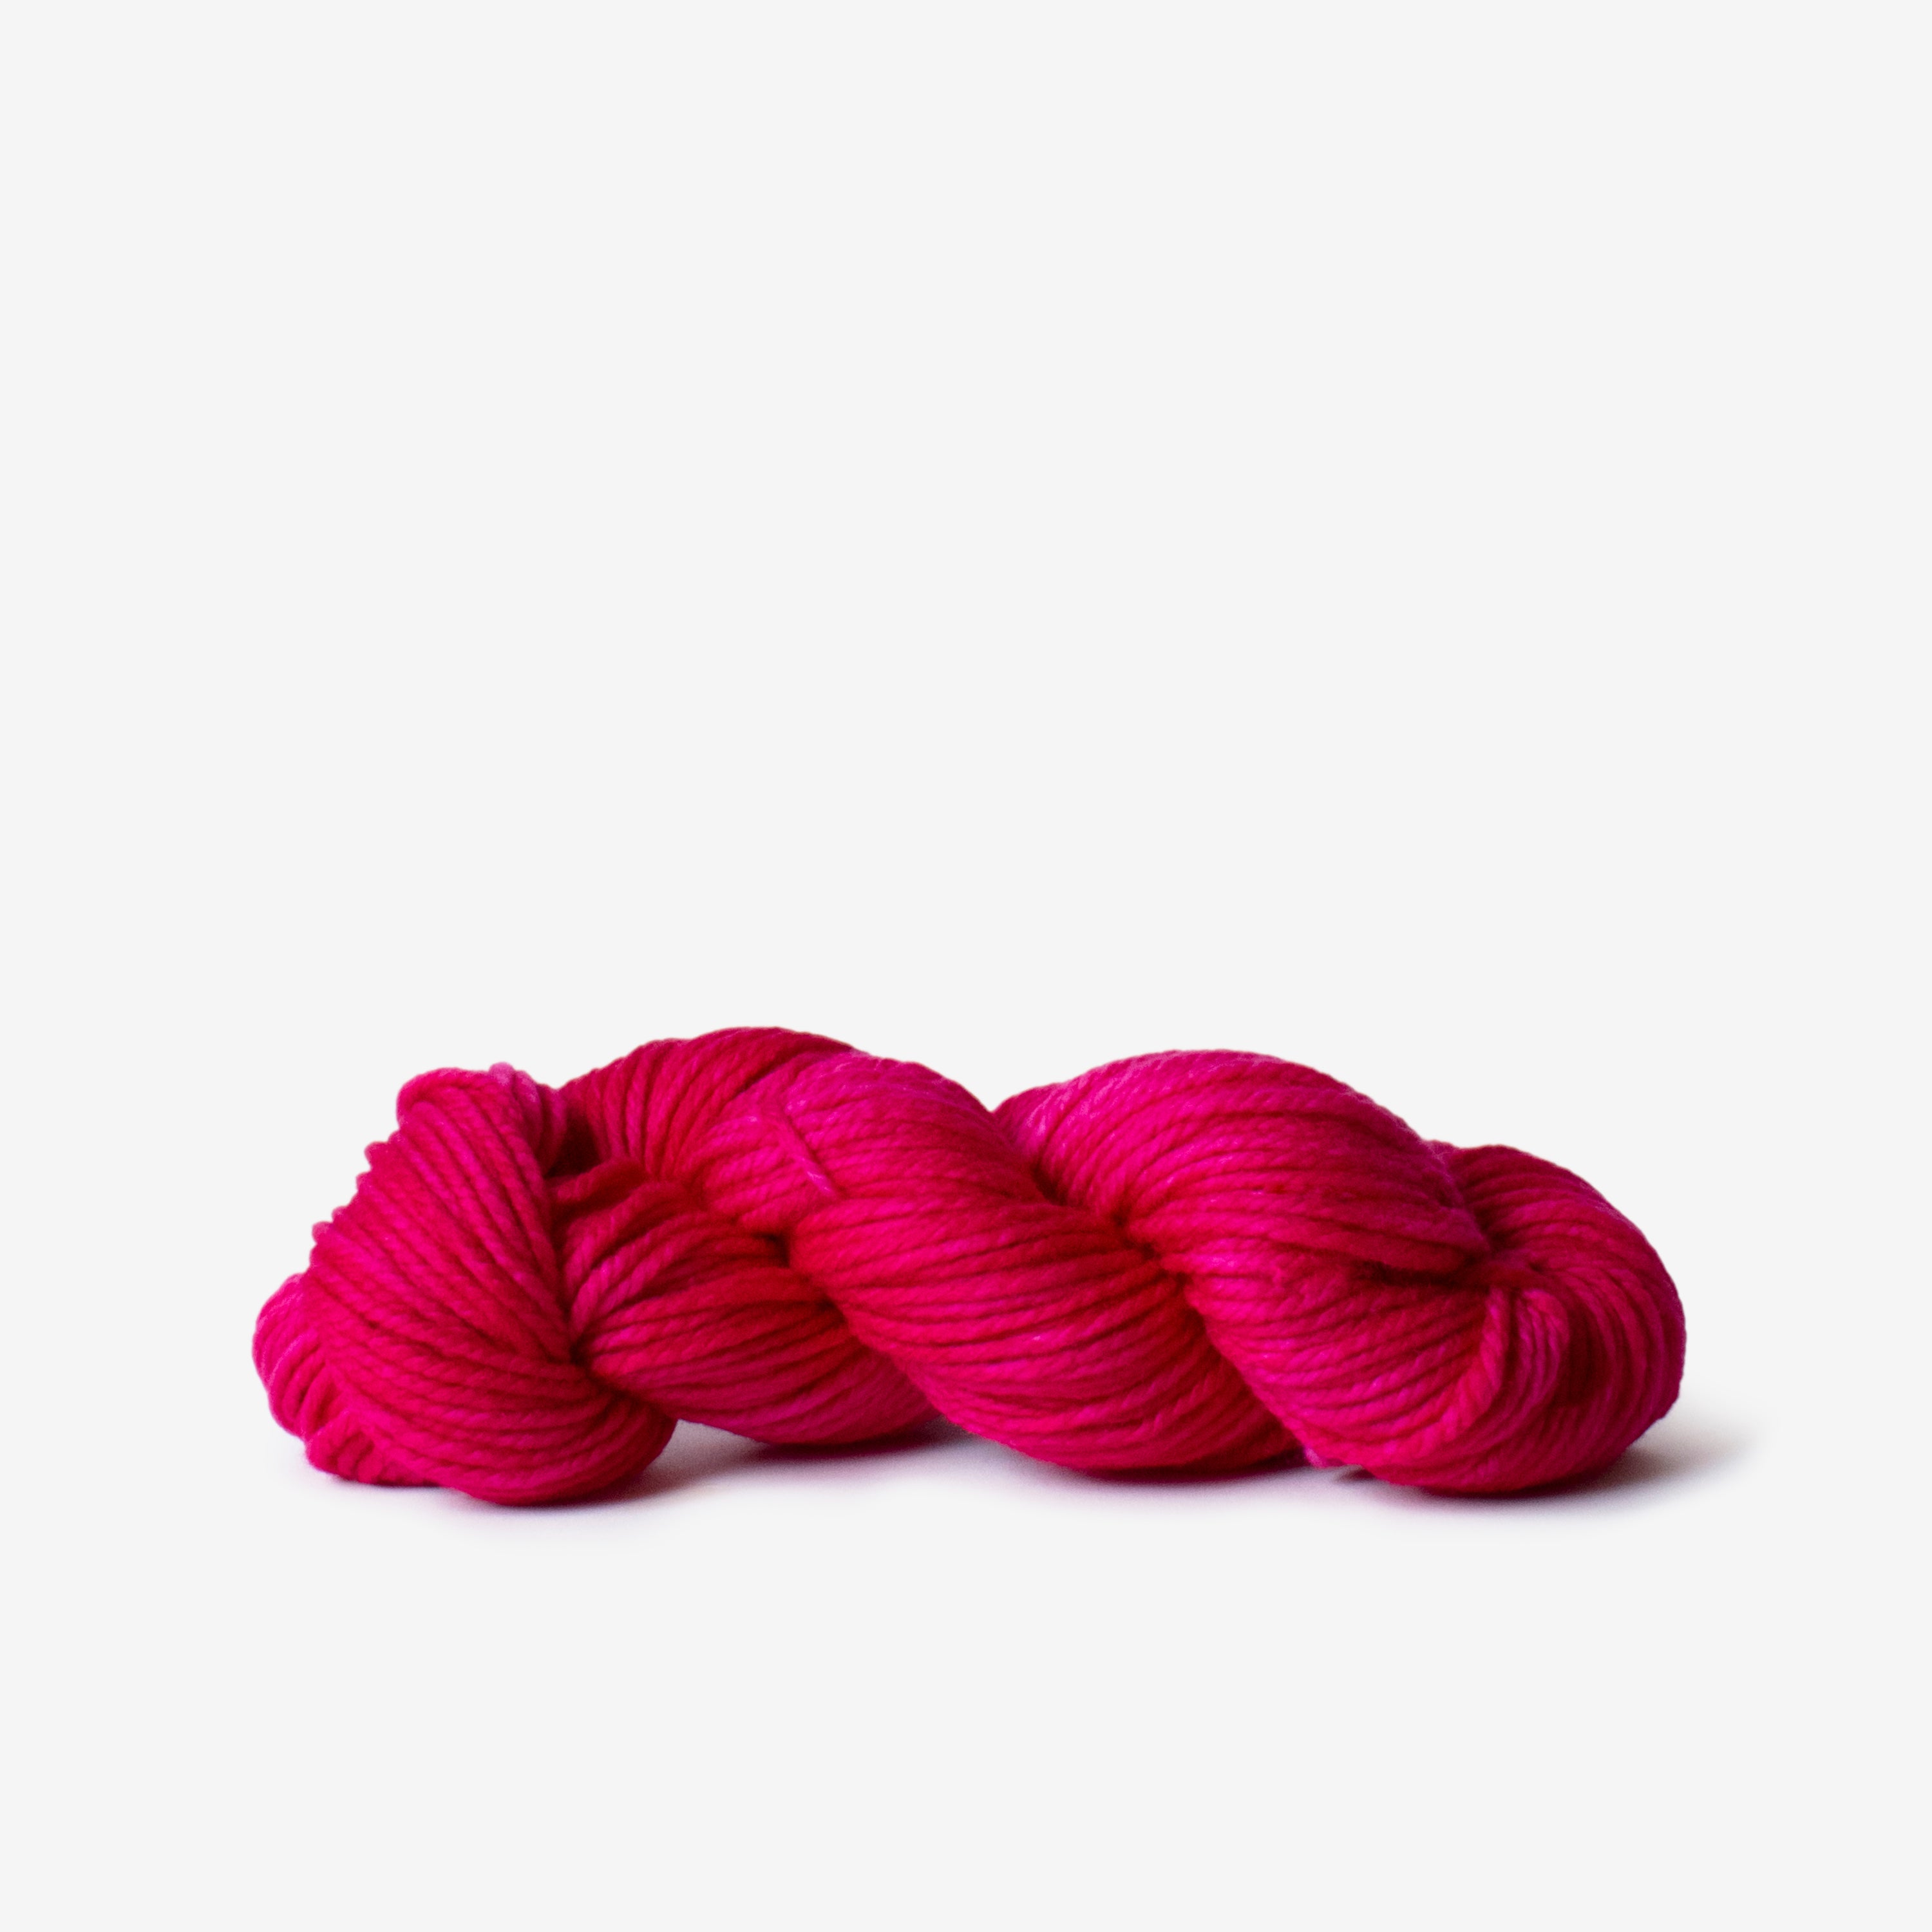 chunky yarn